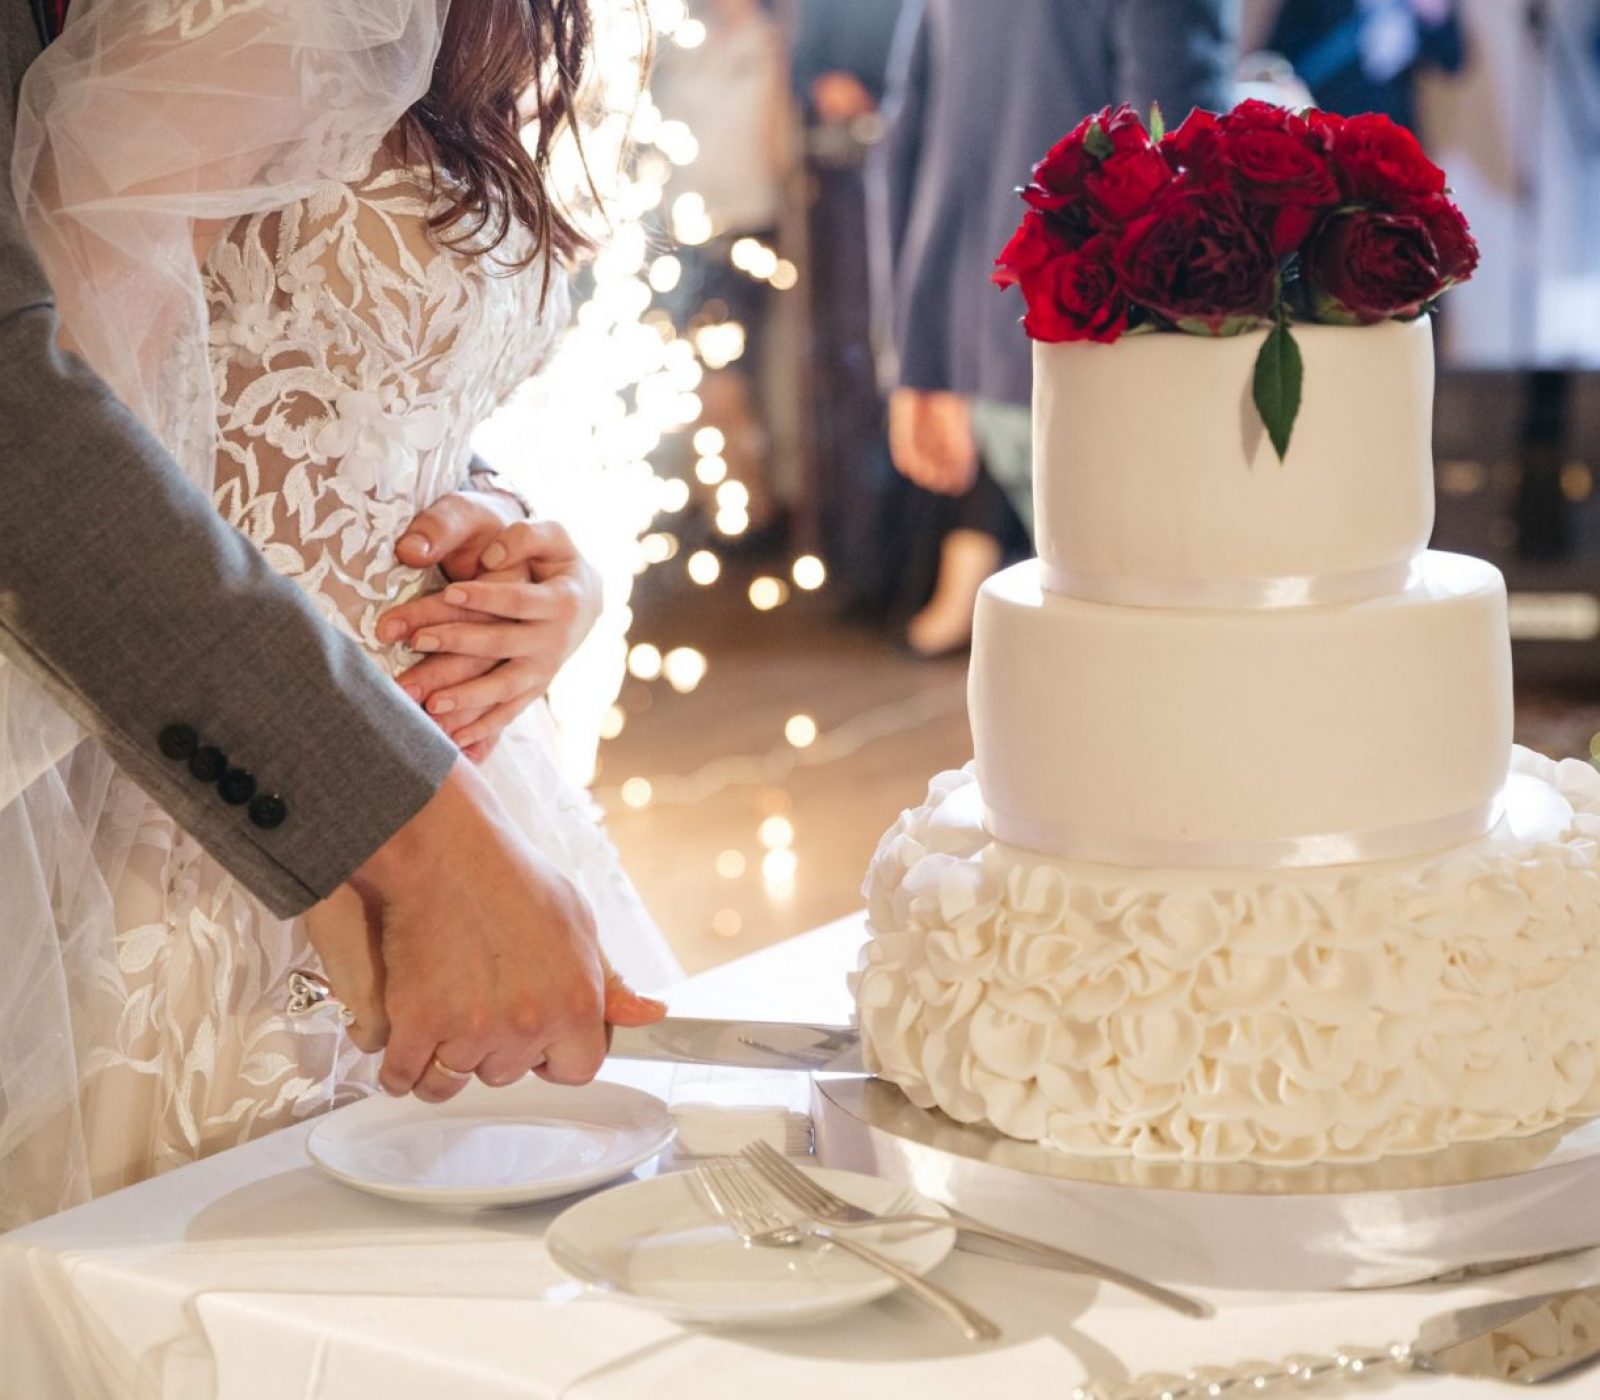 Happy bride and groom cut a wedding cake